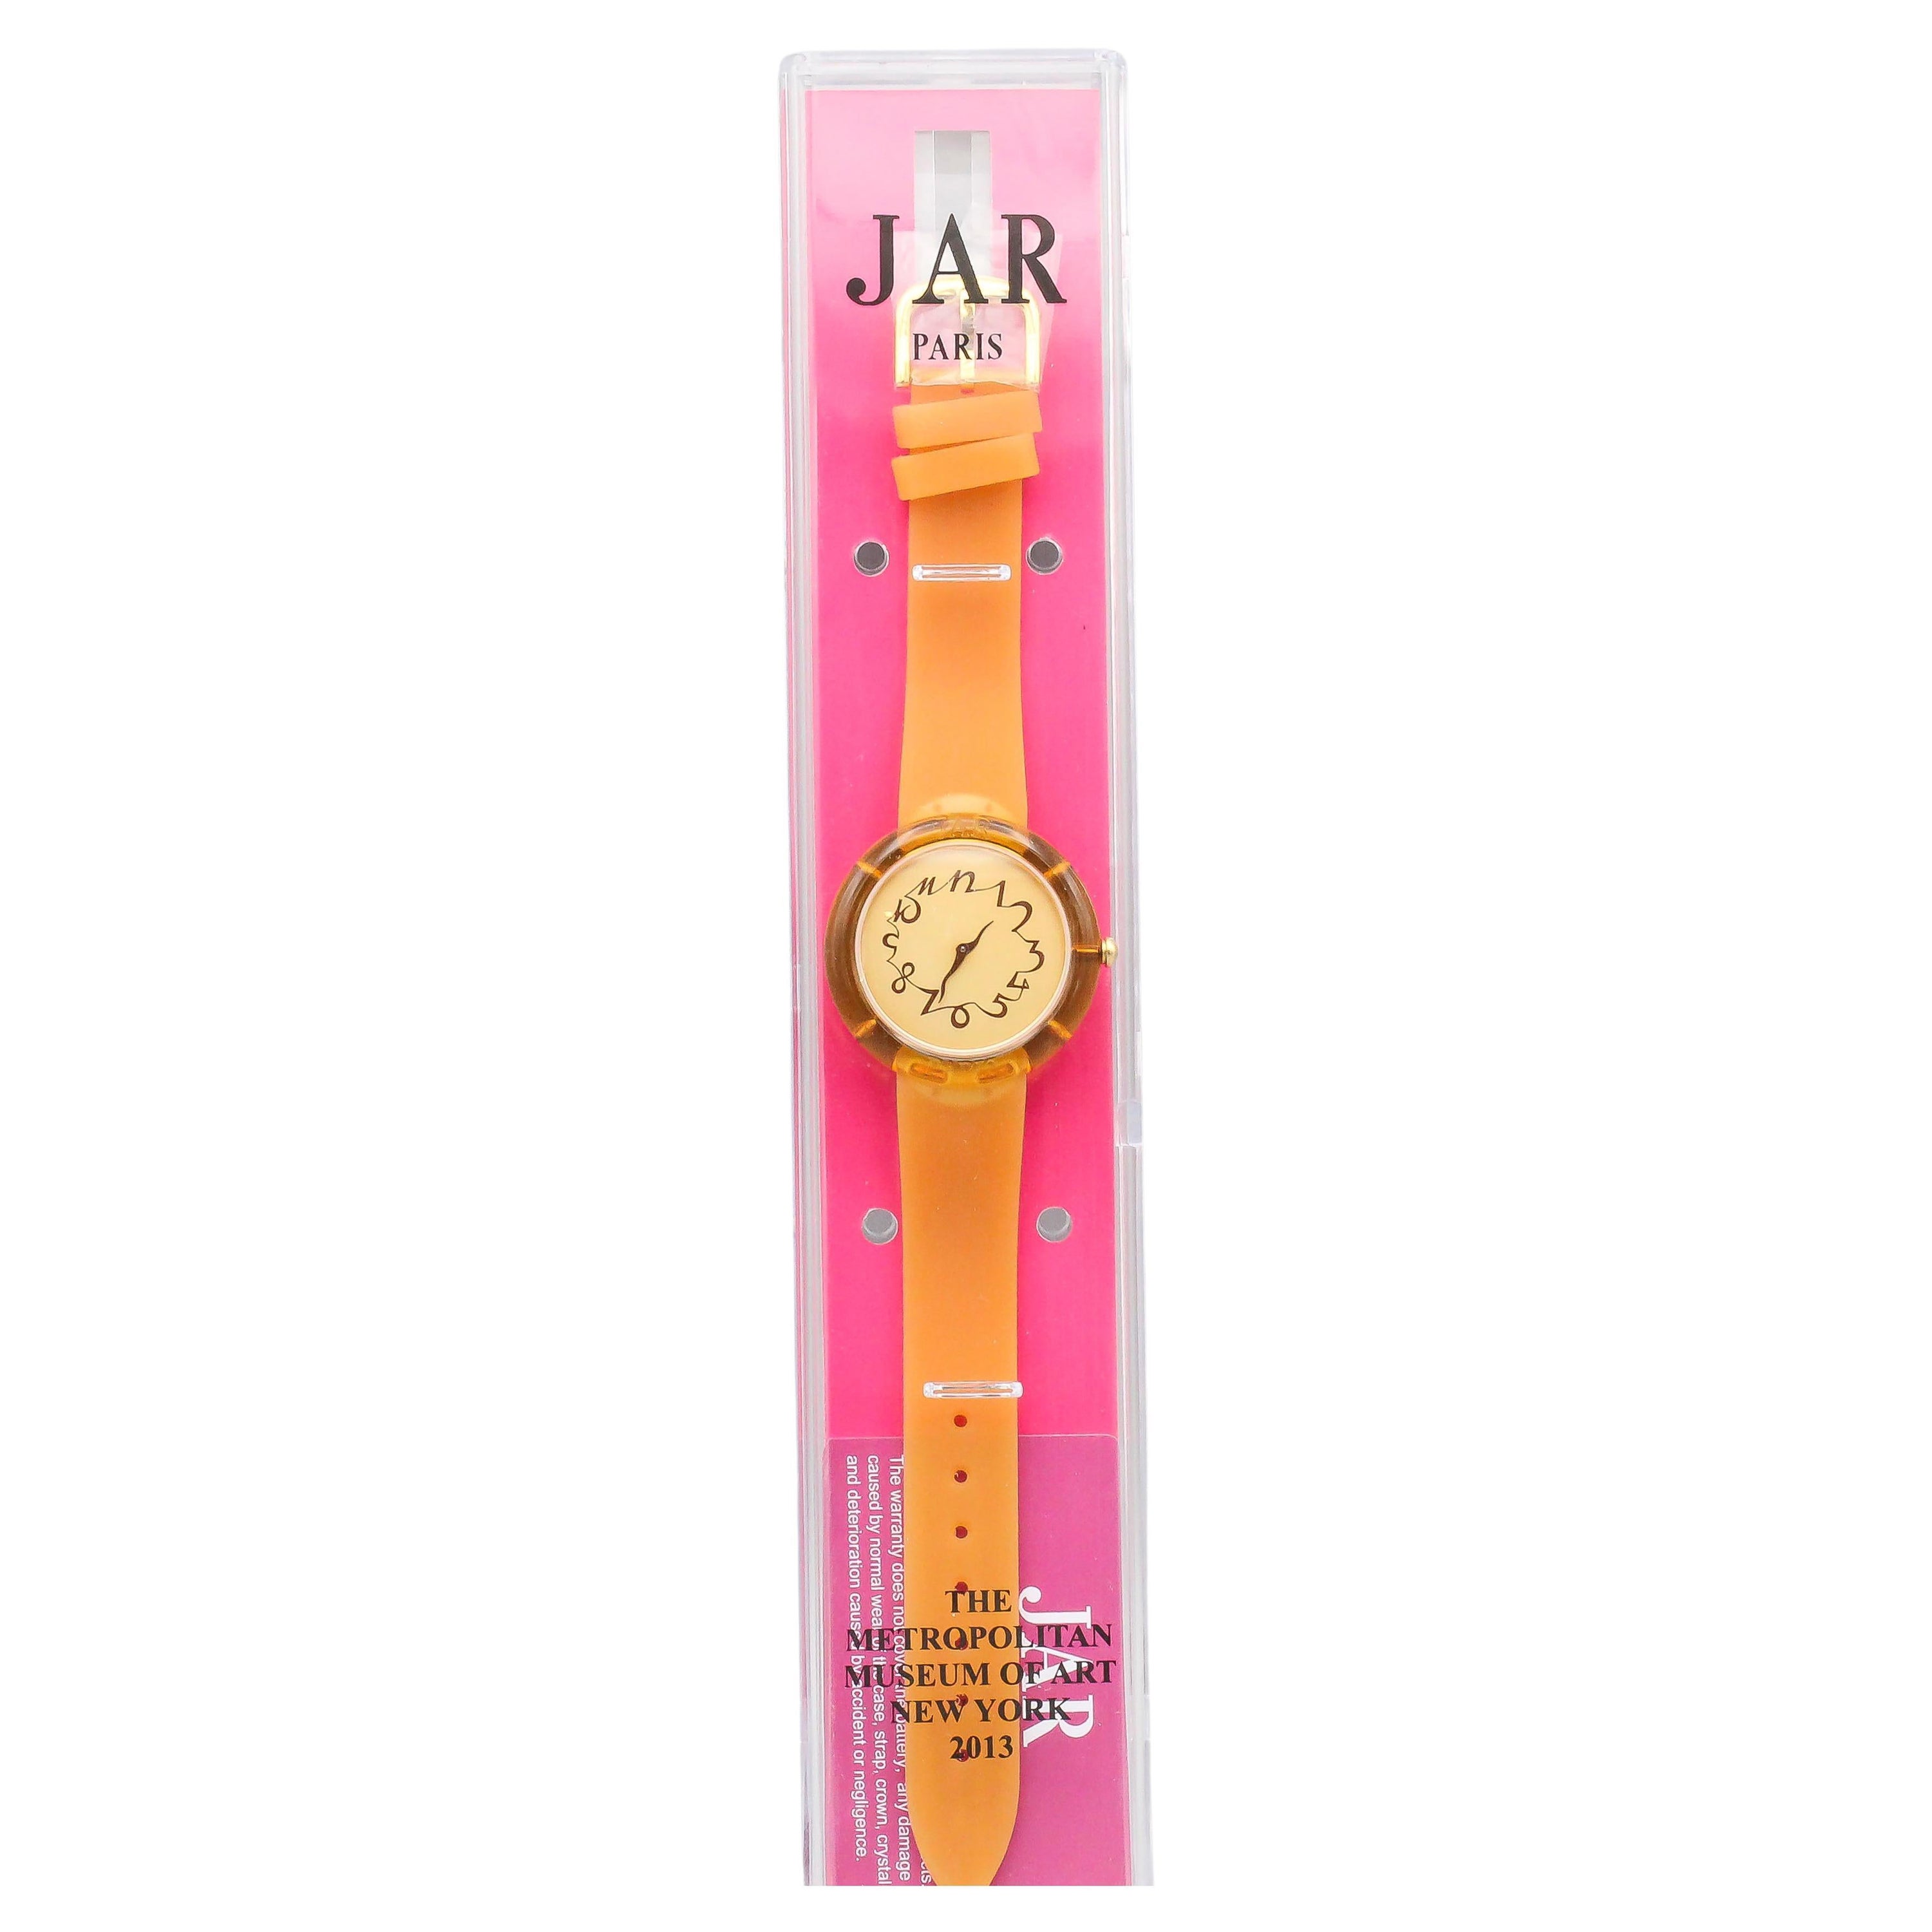 Jar Paris Met Museum Orange Honey Wrist Watch New in Box For Sale